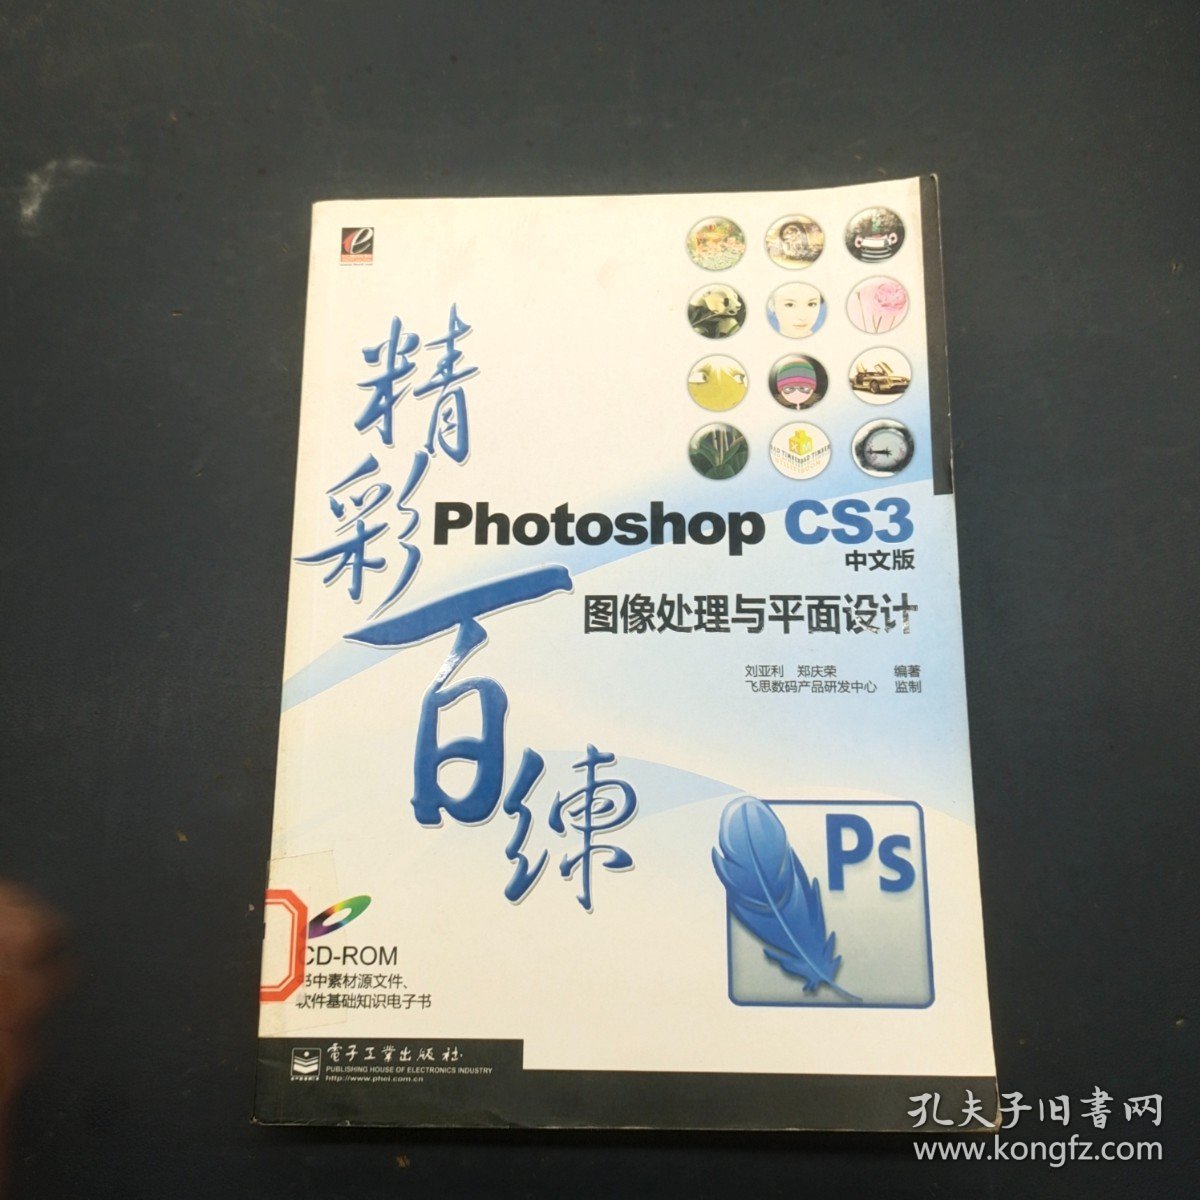 Photoshop CS3中文版图像处理与平面设计精彩百练